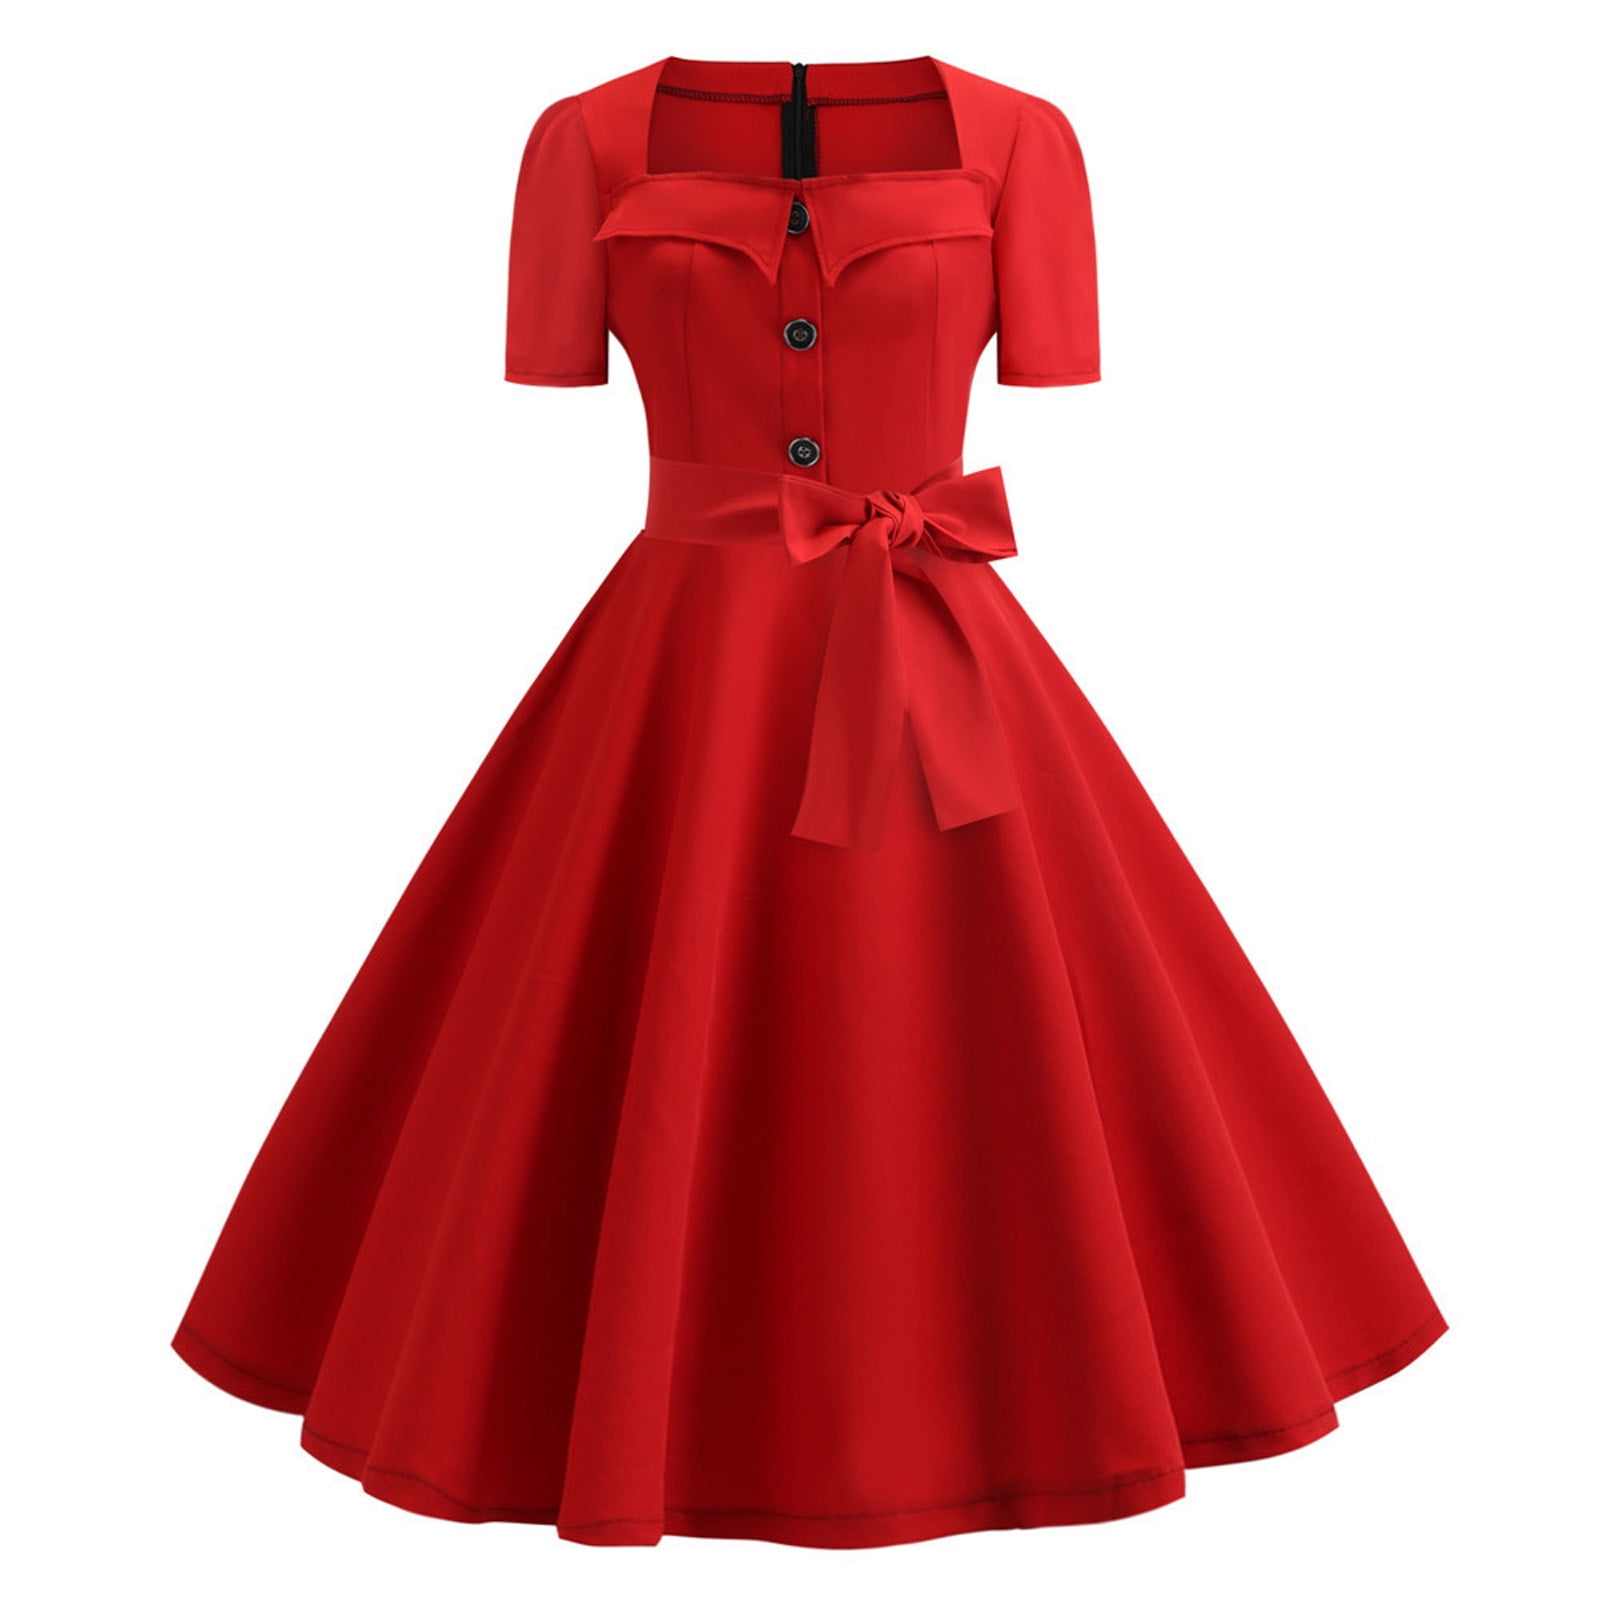 Rbaofujie Womens Sundresses Red Dresses Fashion Womens A Line Flare Vintage Dress Bowknot Prom